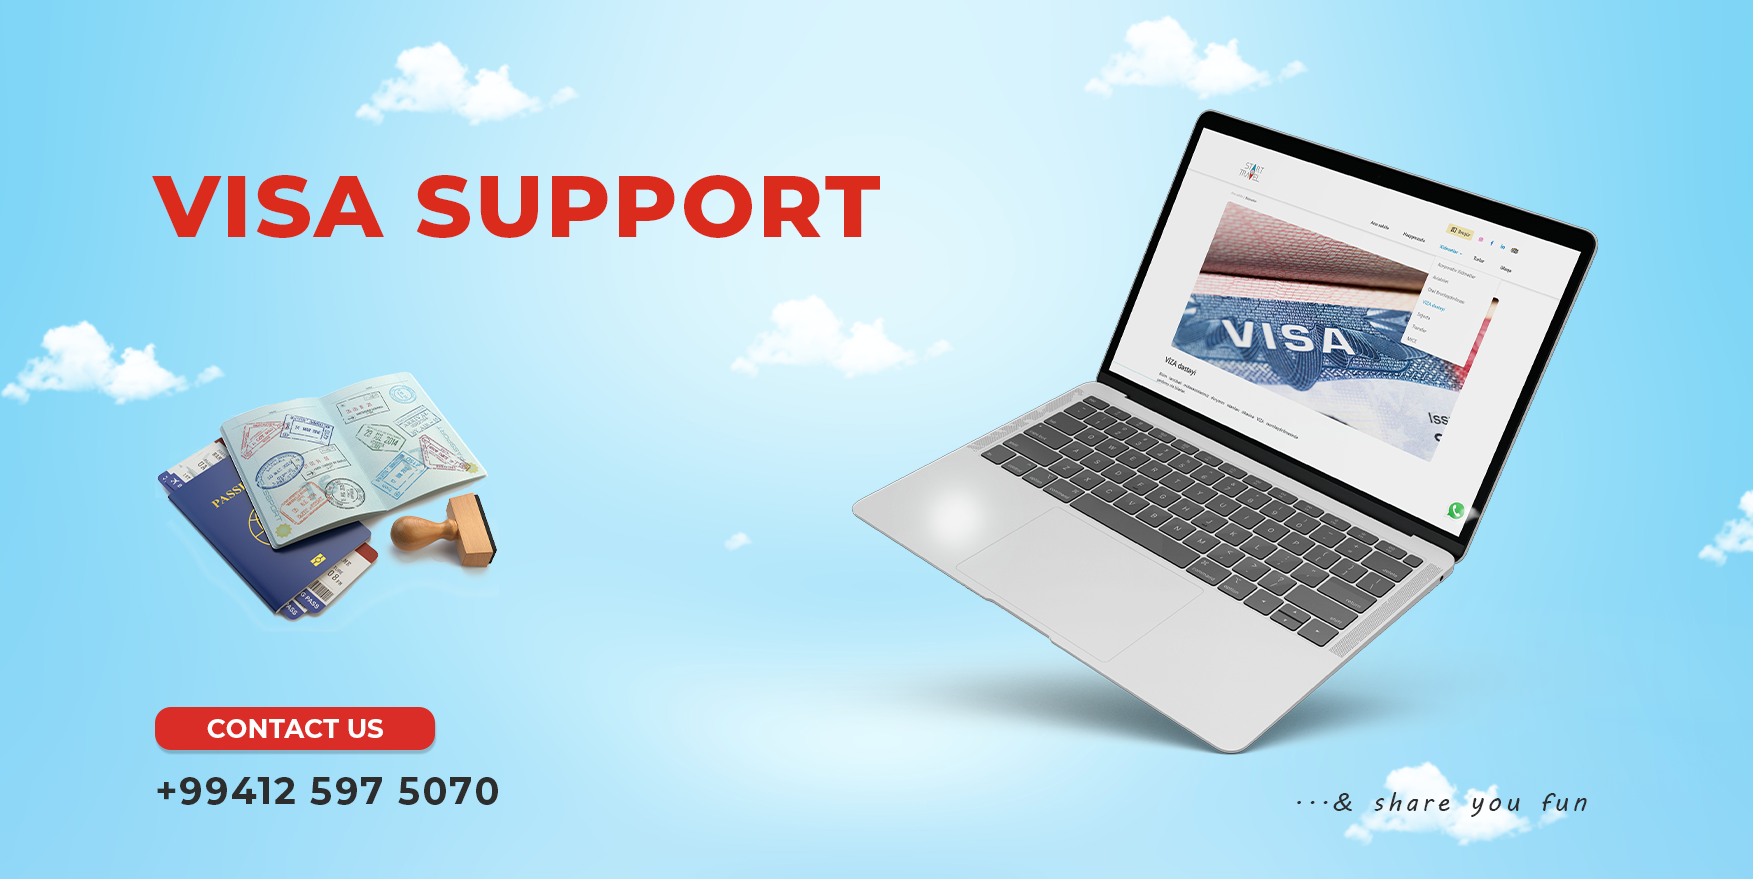 Visa support